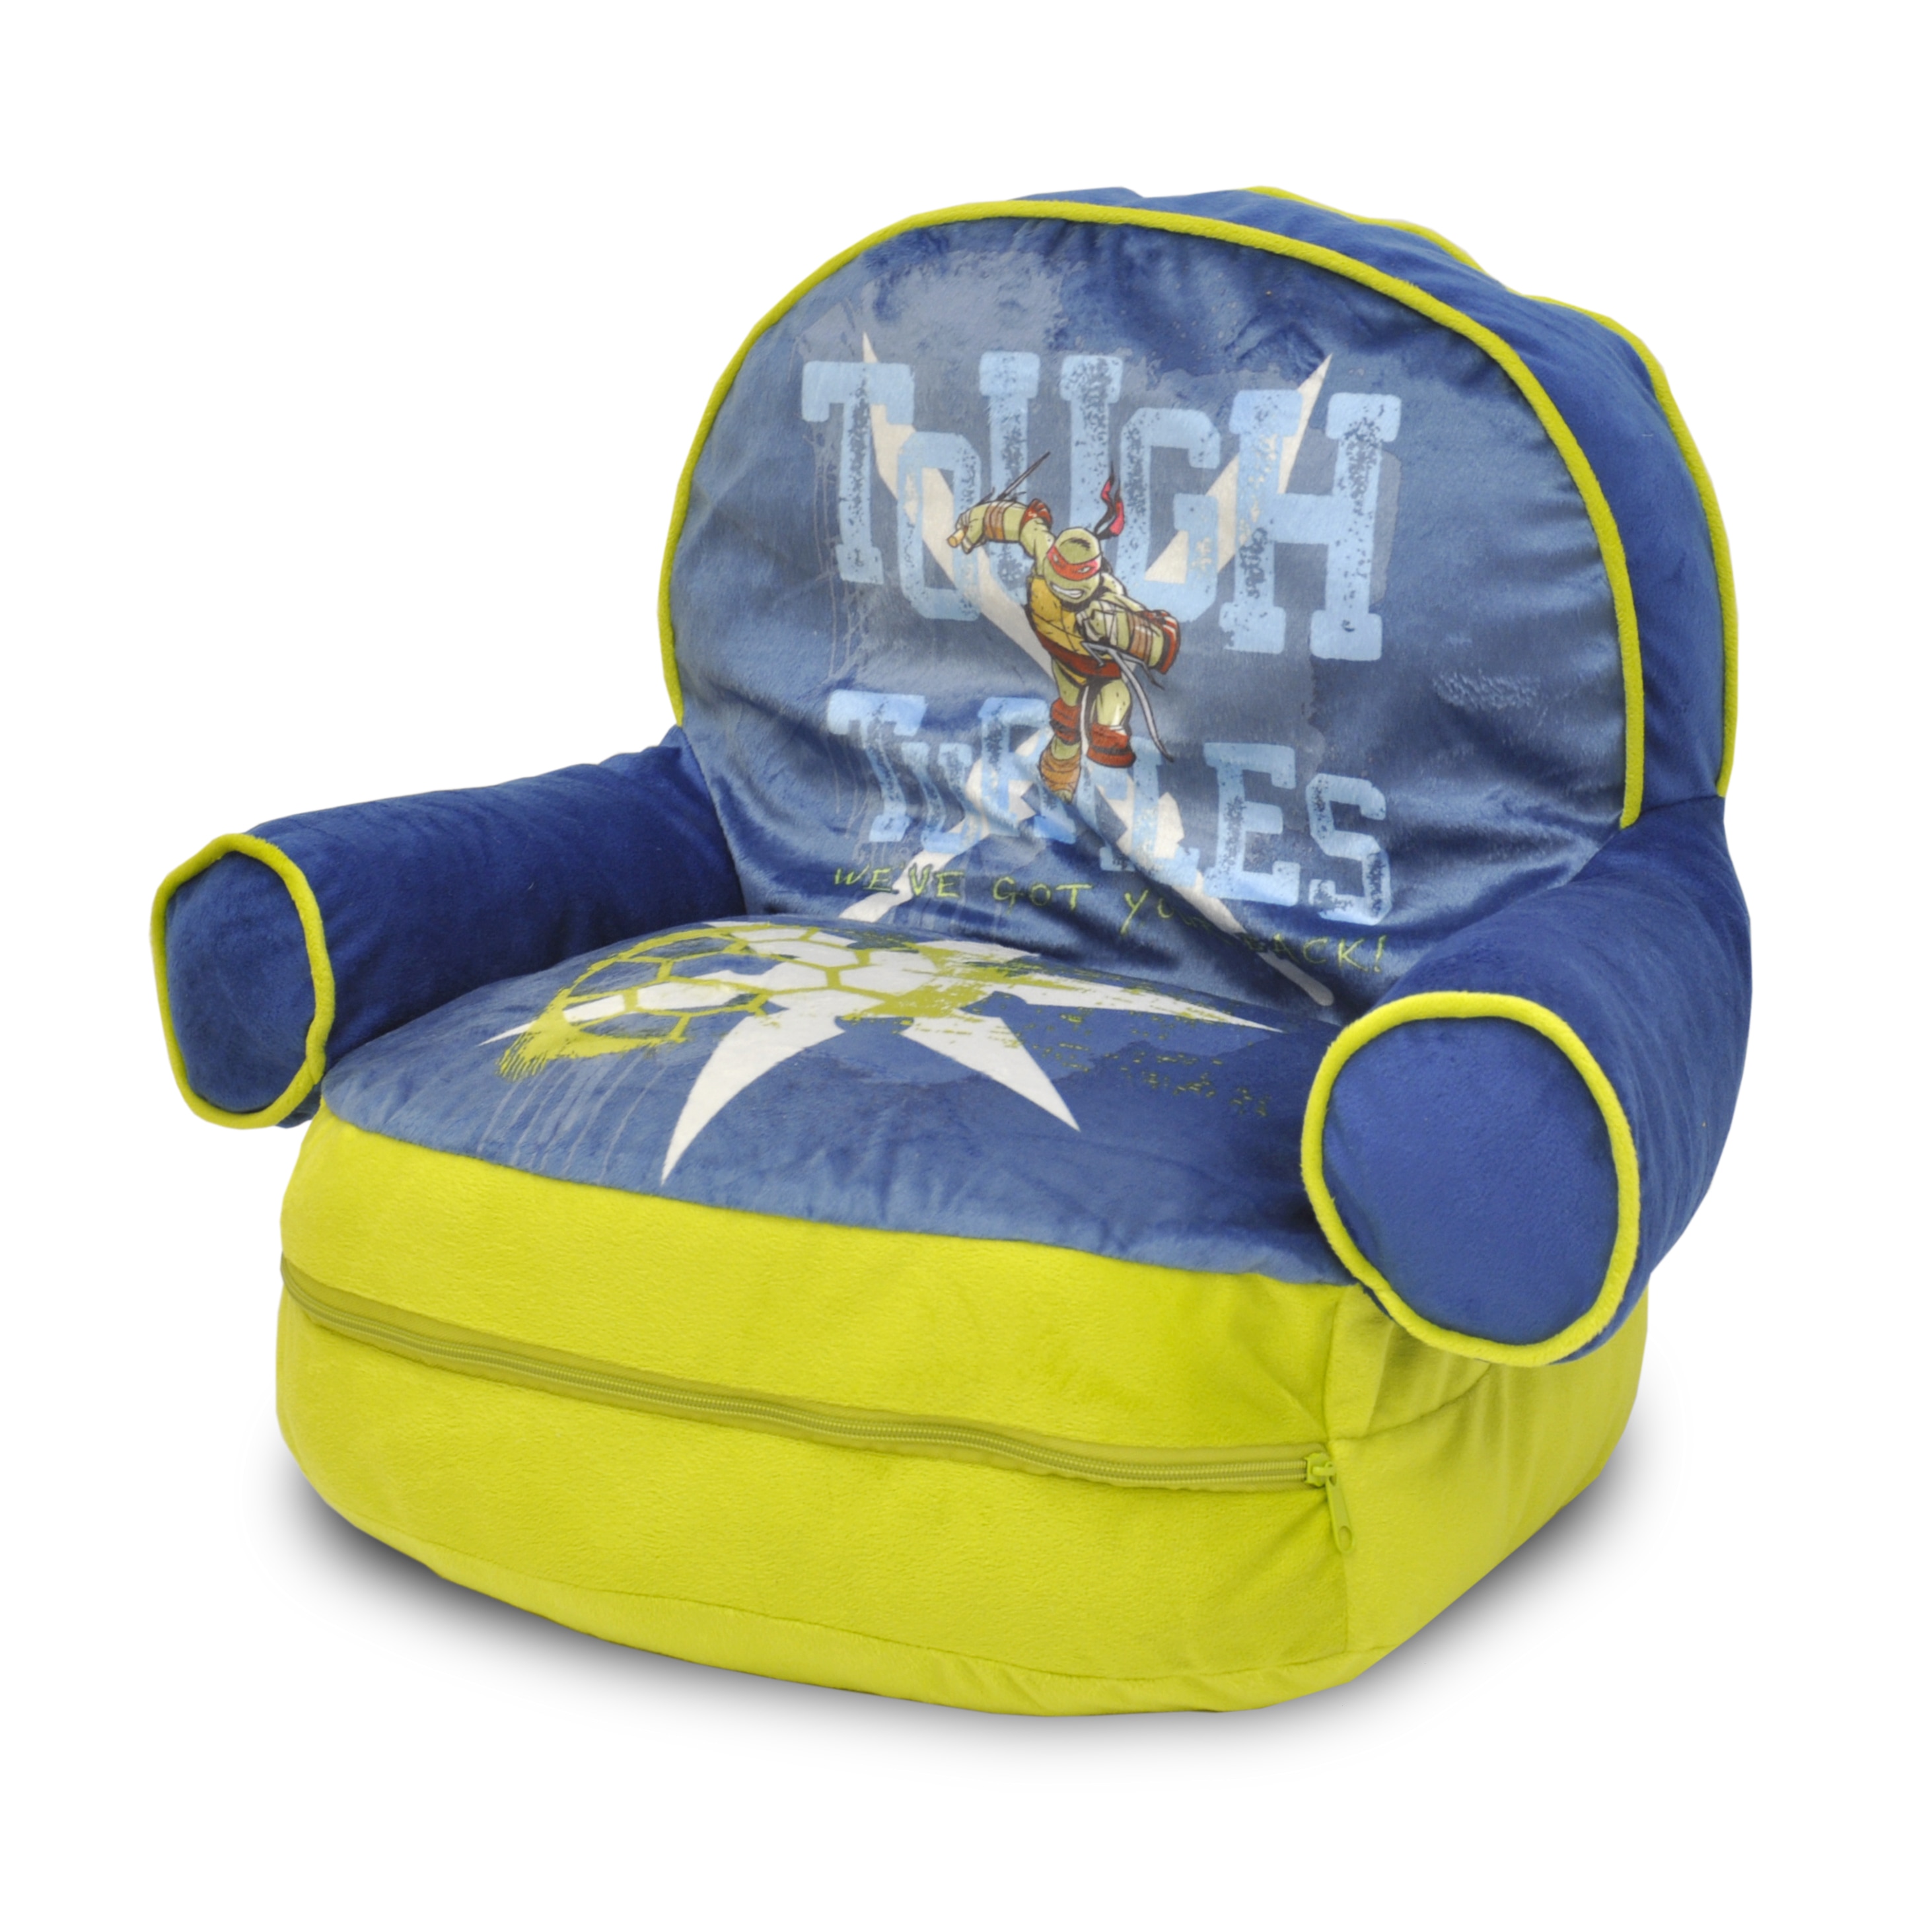 Shop Black Friday Deals On Teenage Mutant Ninja Turtles Sofa Bean Bag Arm Chair And Sleeping Bag Overstock 13210922